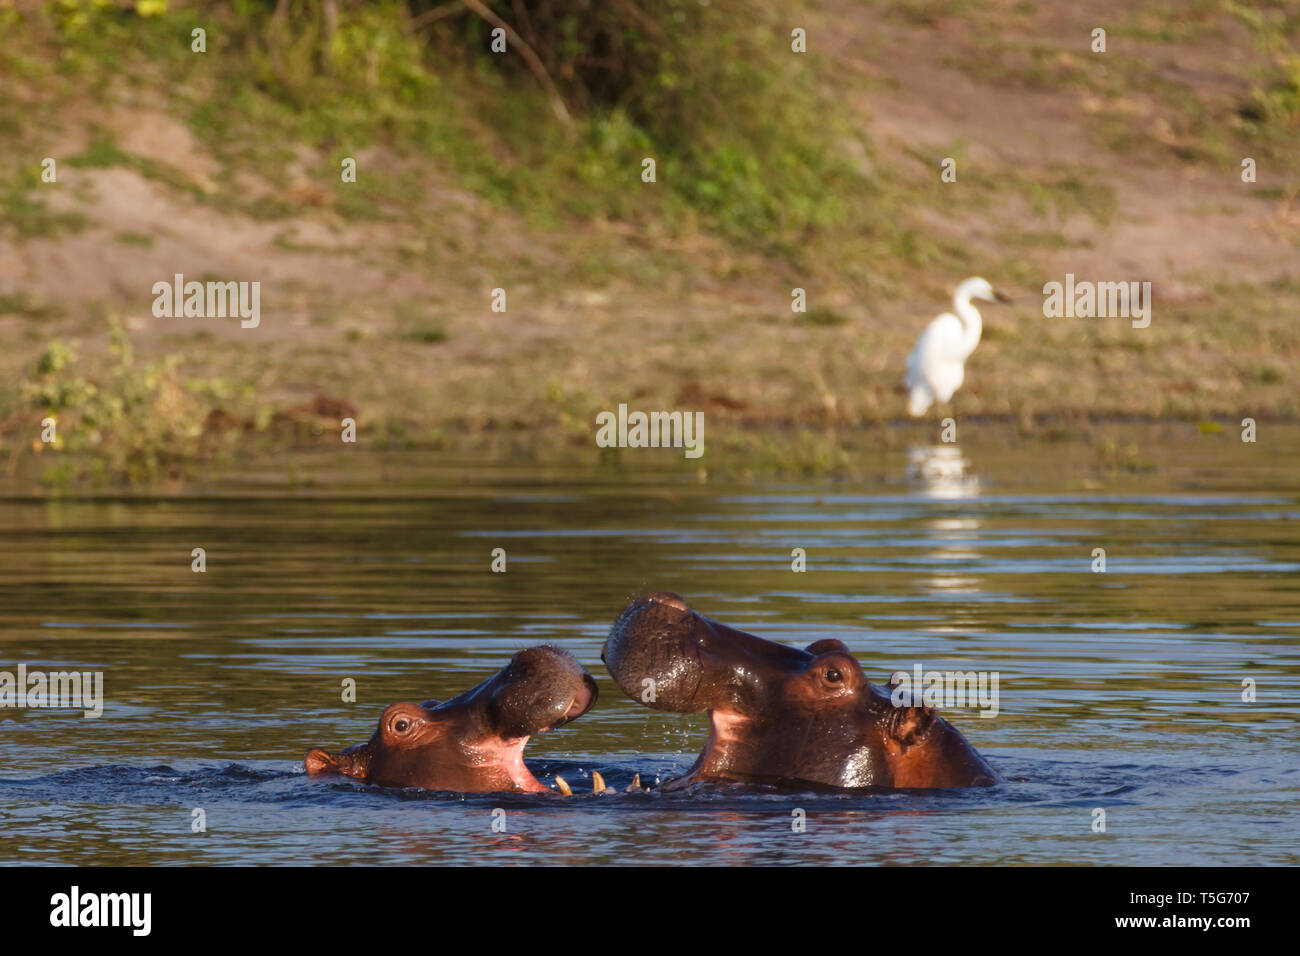 Primo piano di due hippos, Hippopotamus amphibius, affacciati con bocche aperte in acqua Foto Stock